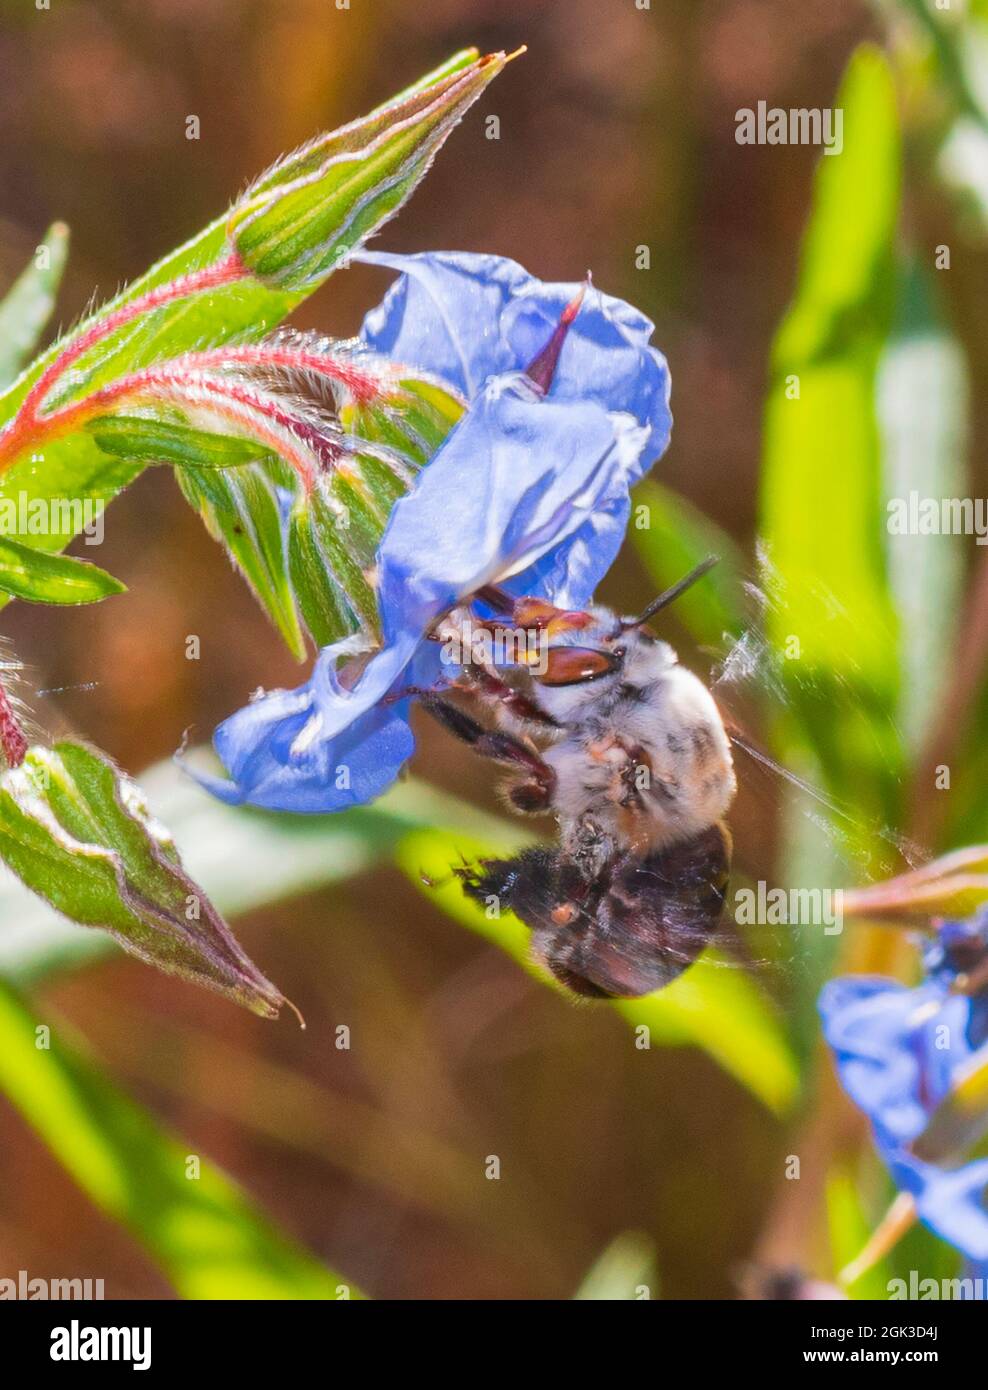 Une femelle d'Amegilla dawsoni (Dawson's Burrammer Bee) qui pollinise une fleur bleue, parc national Kennedy Range, Australie occidentale, Australie occidentale, Australie Banque D'Images